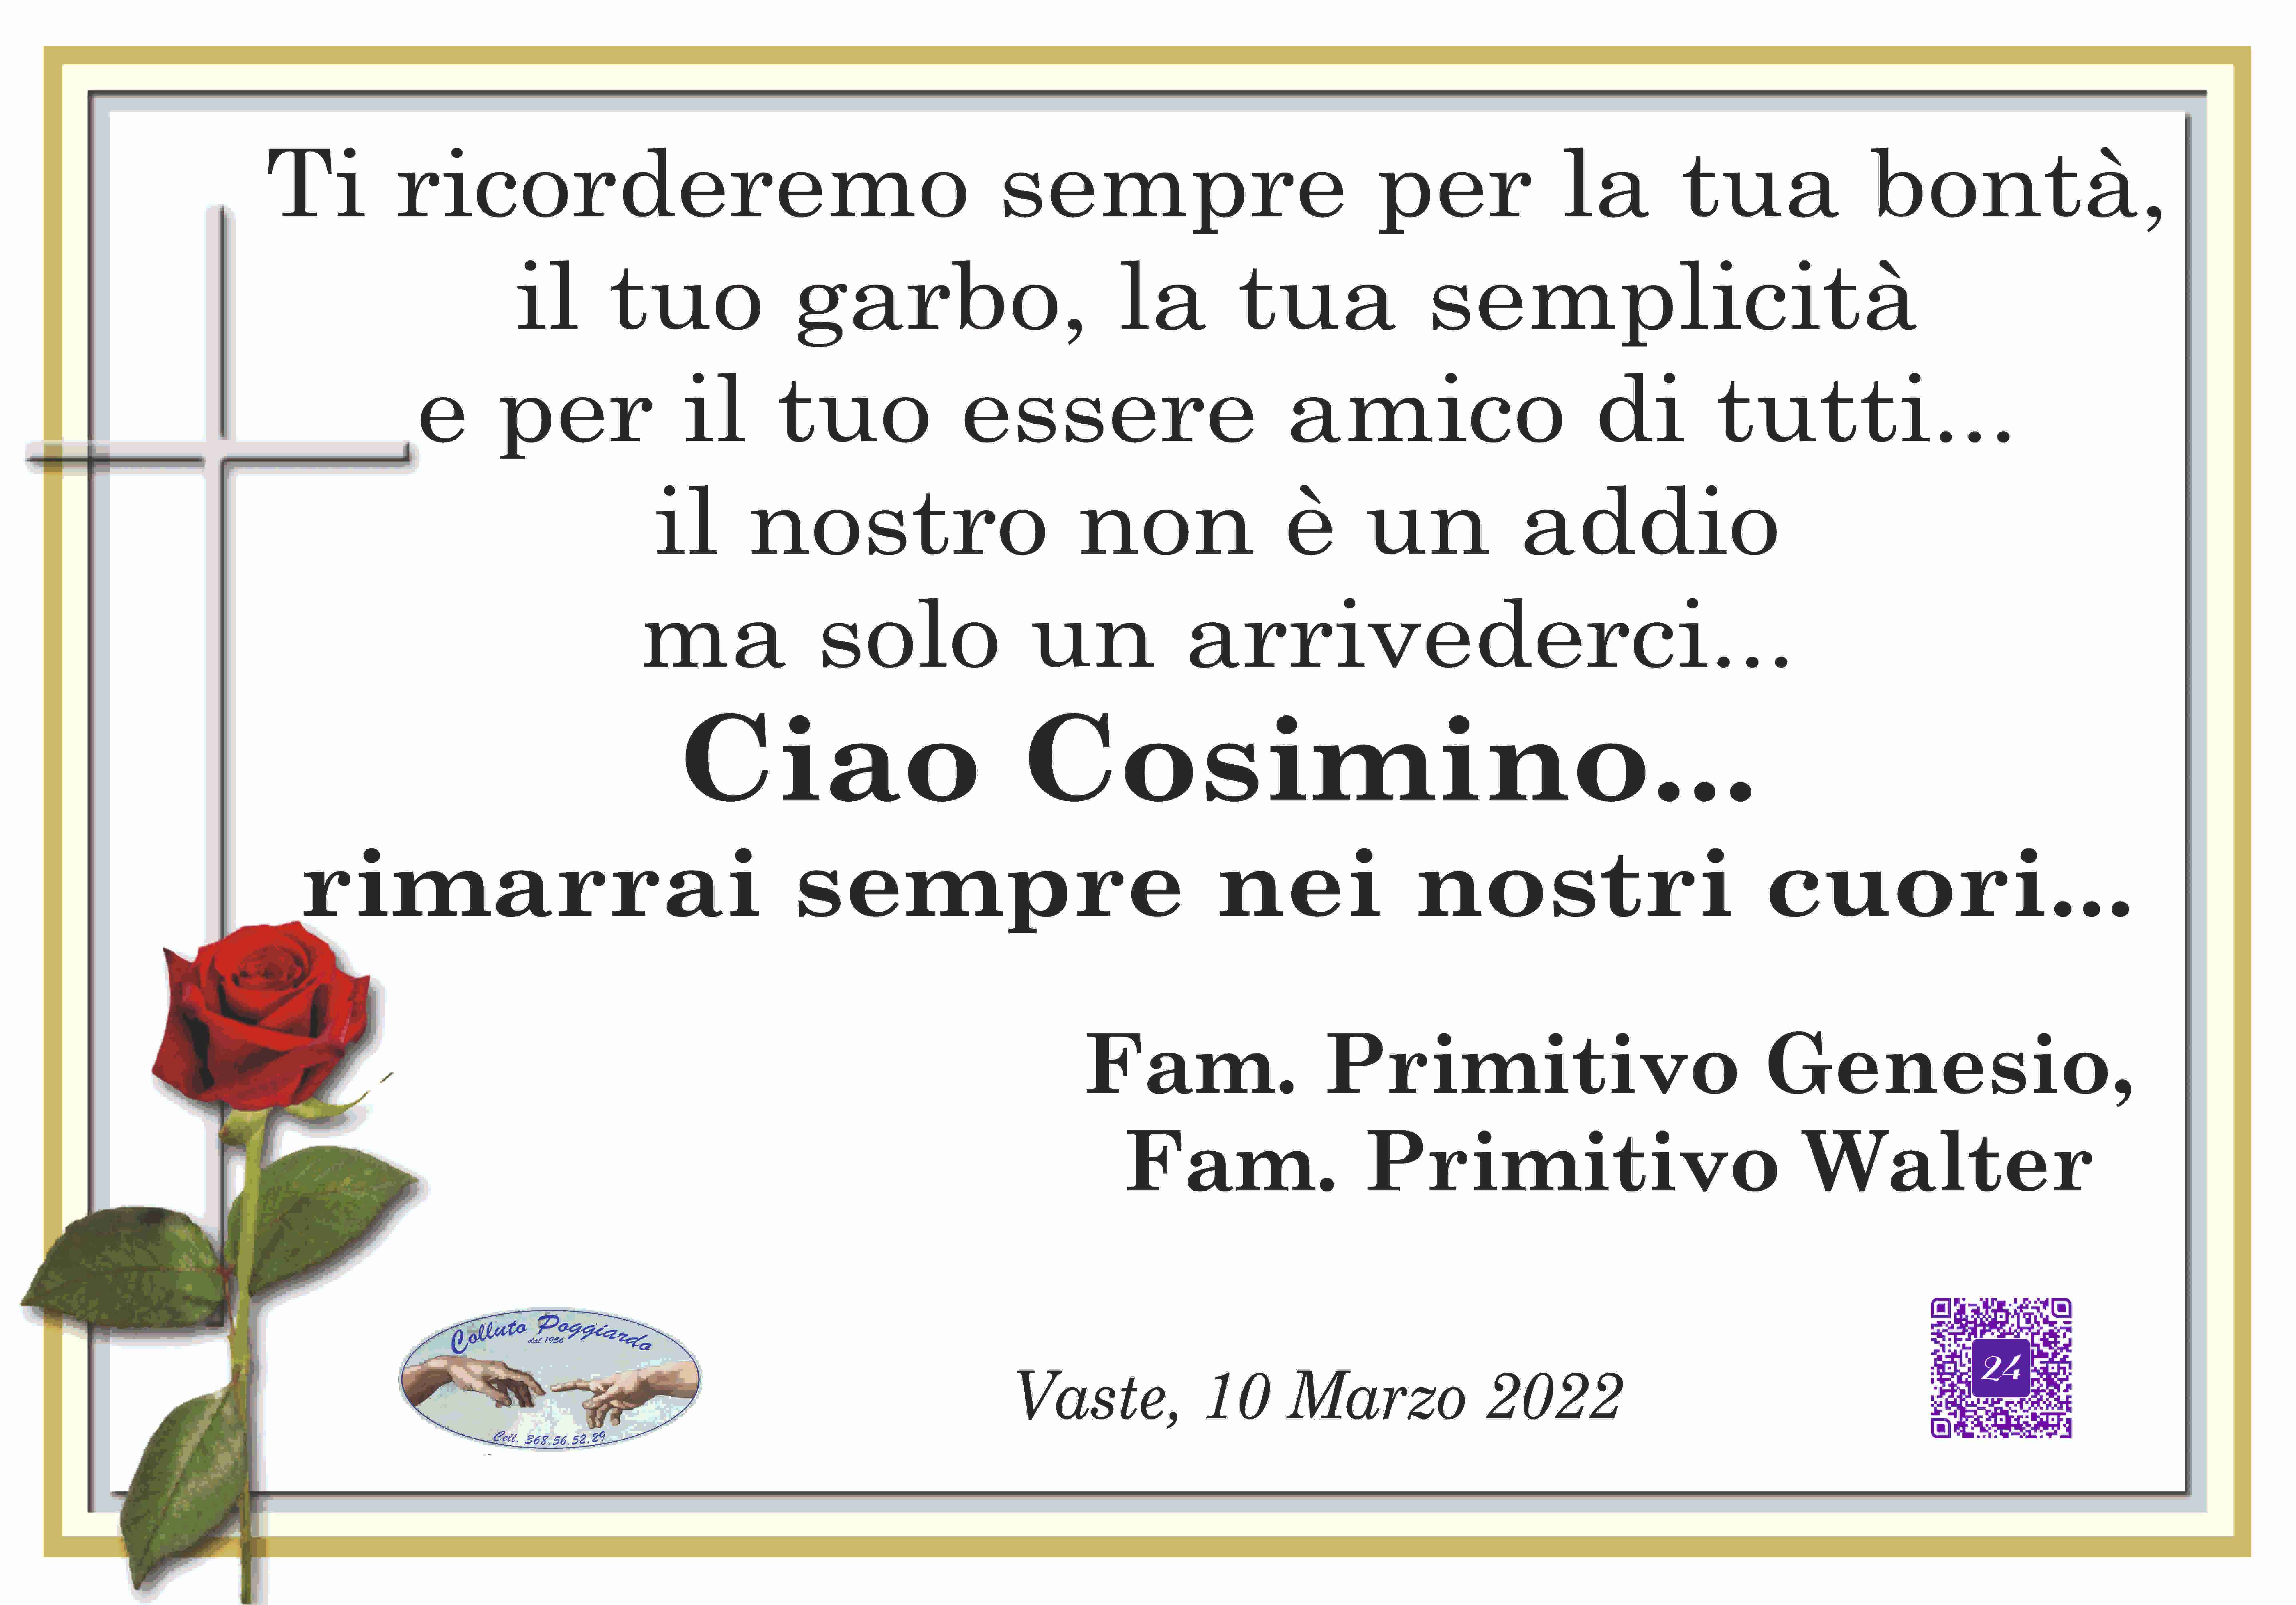 Cosimo Resta